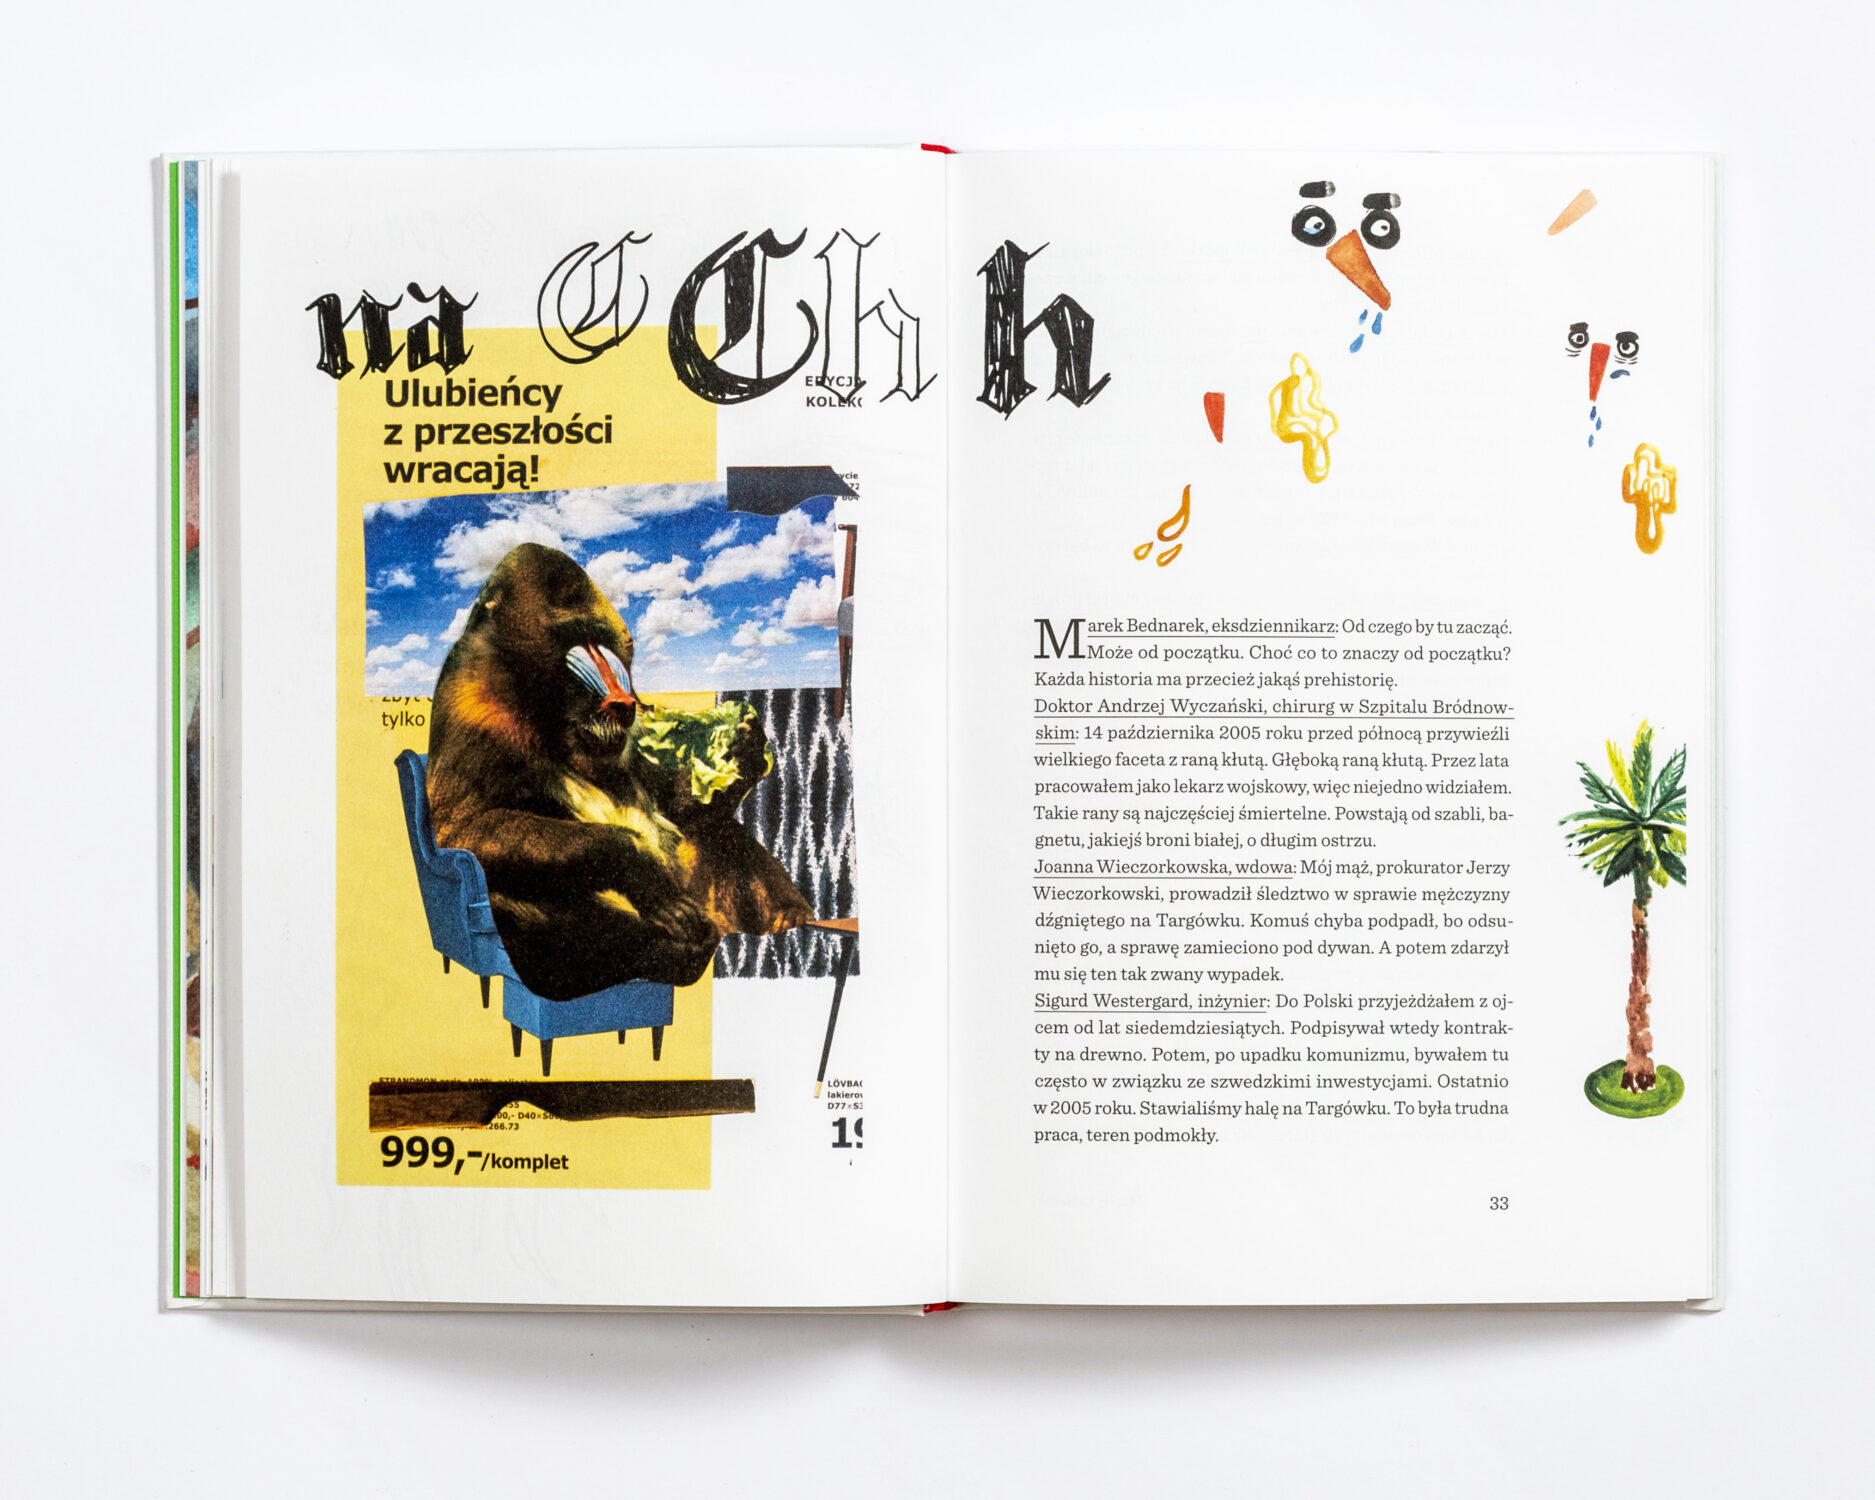 Środek książki, ilustracja i tekst, na ilustracji goryl i żółte elementy 